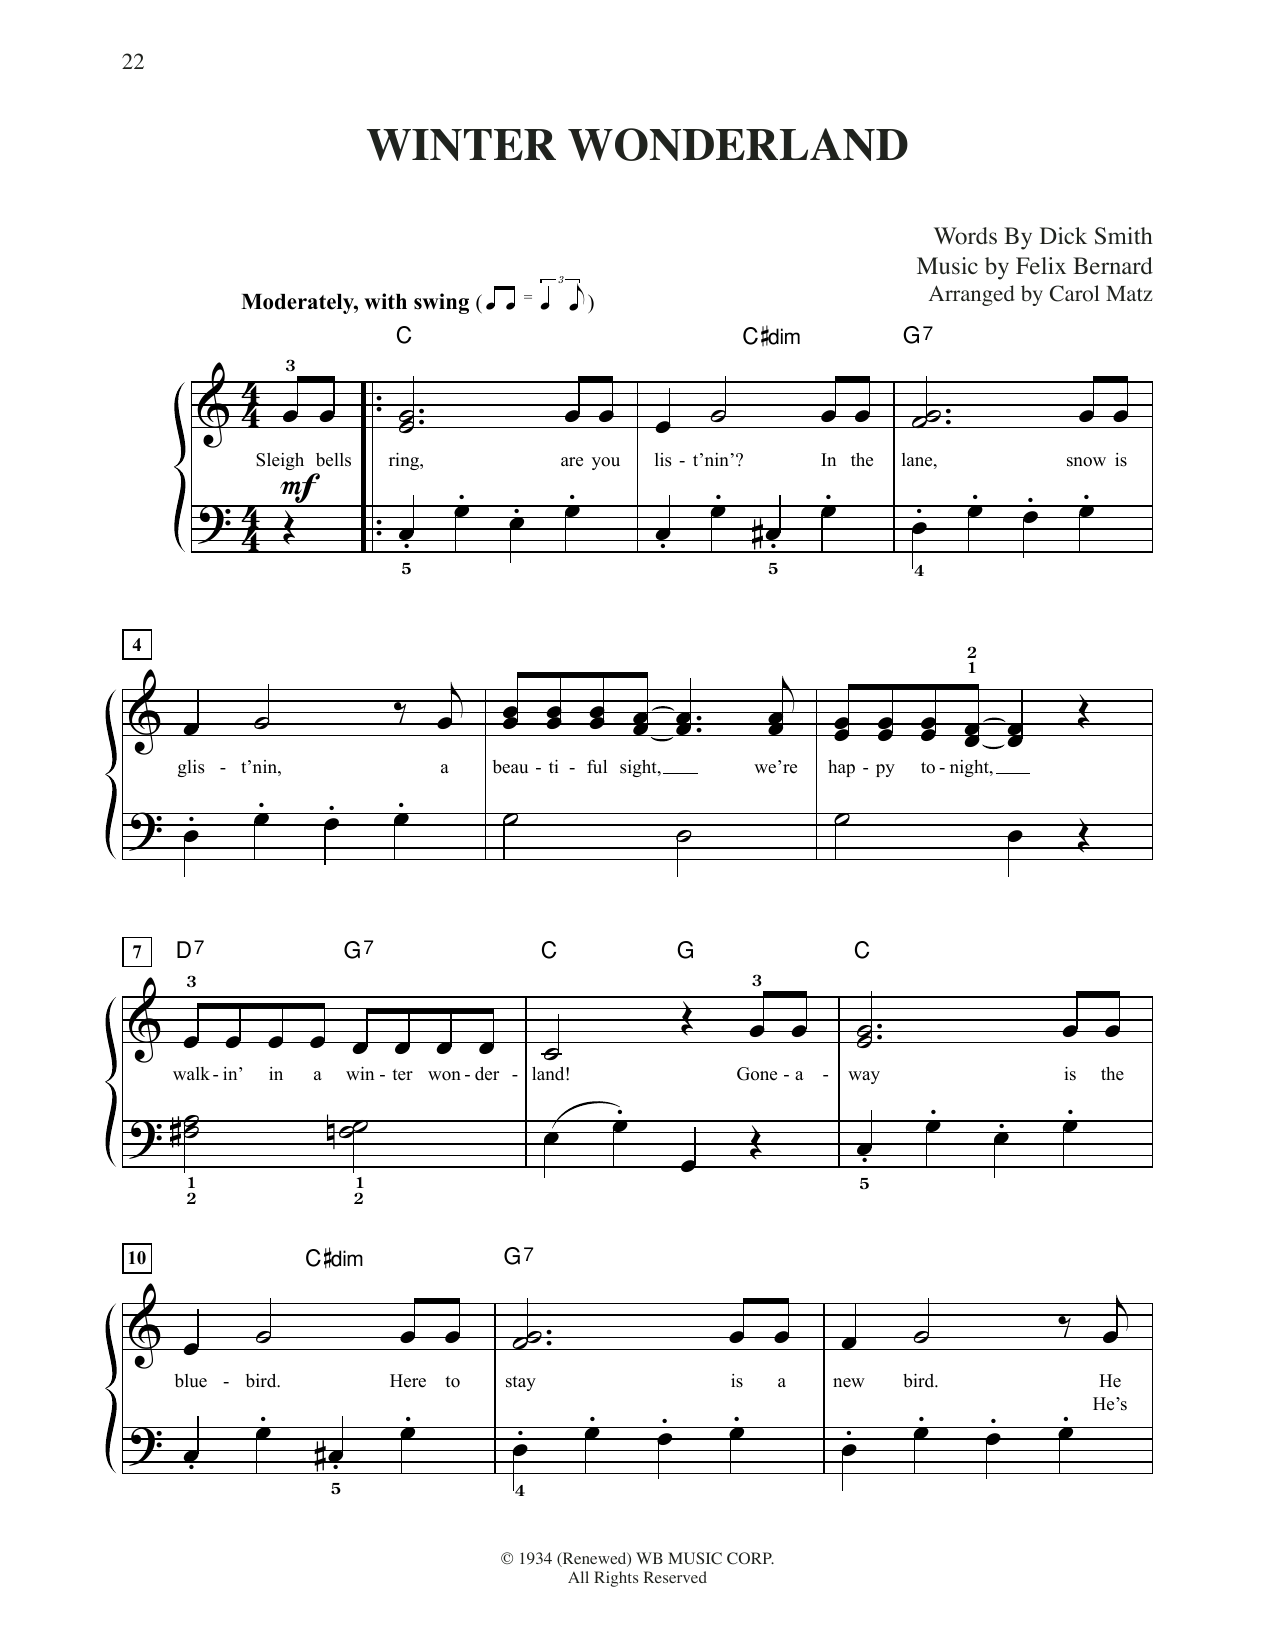 Download Felix Bernard Winter Wonderland (arr. Carol Matz) Sheet Music and learn how to play Big Note Piano PDF digital score in minutes